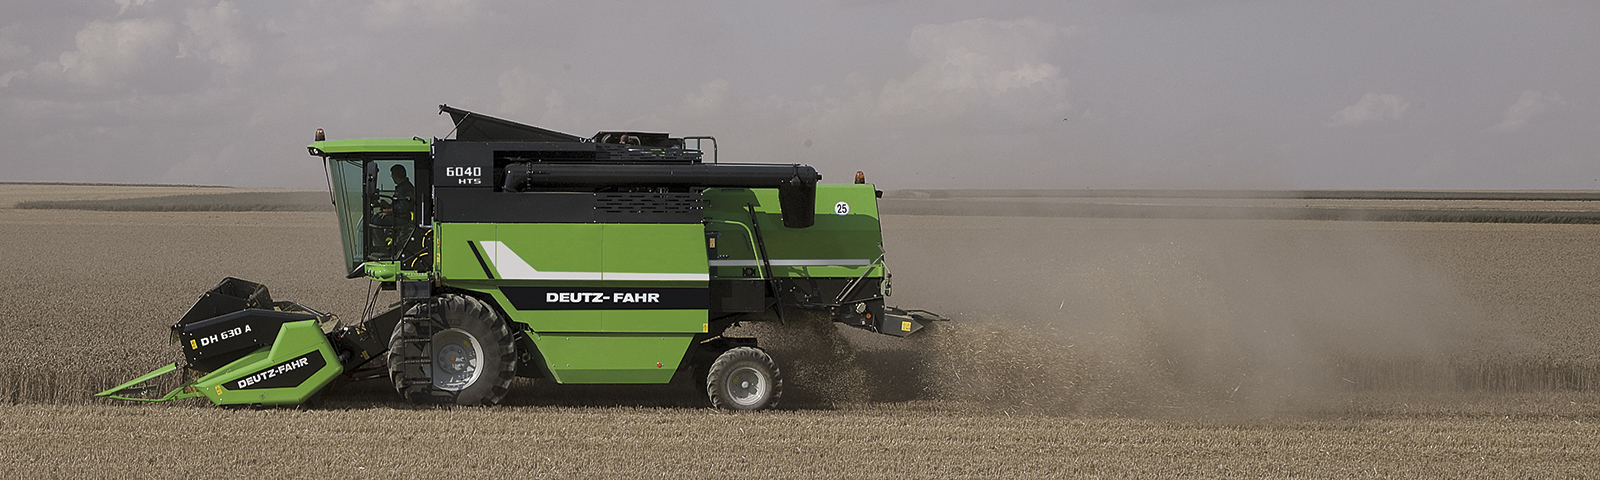 Combine harvester Deutz Fahr series 6040